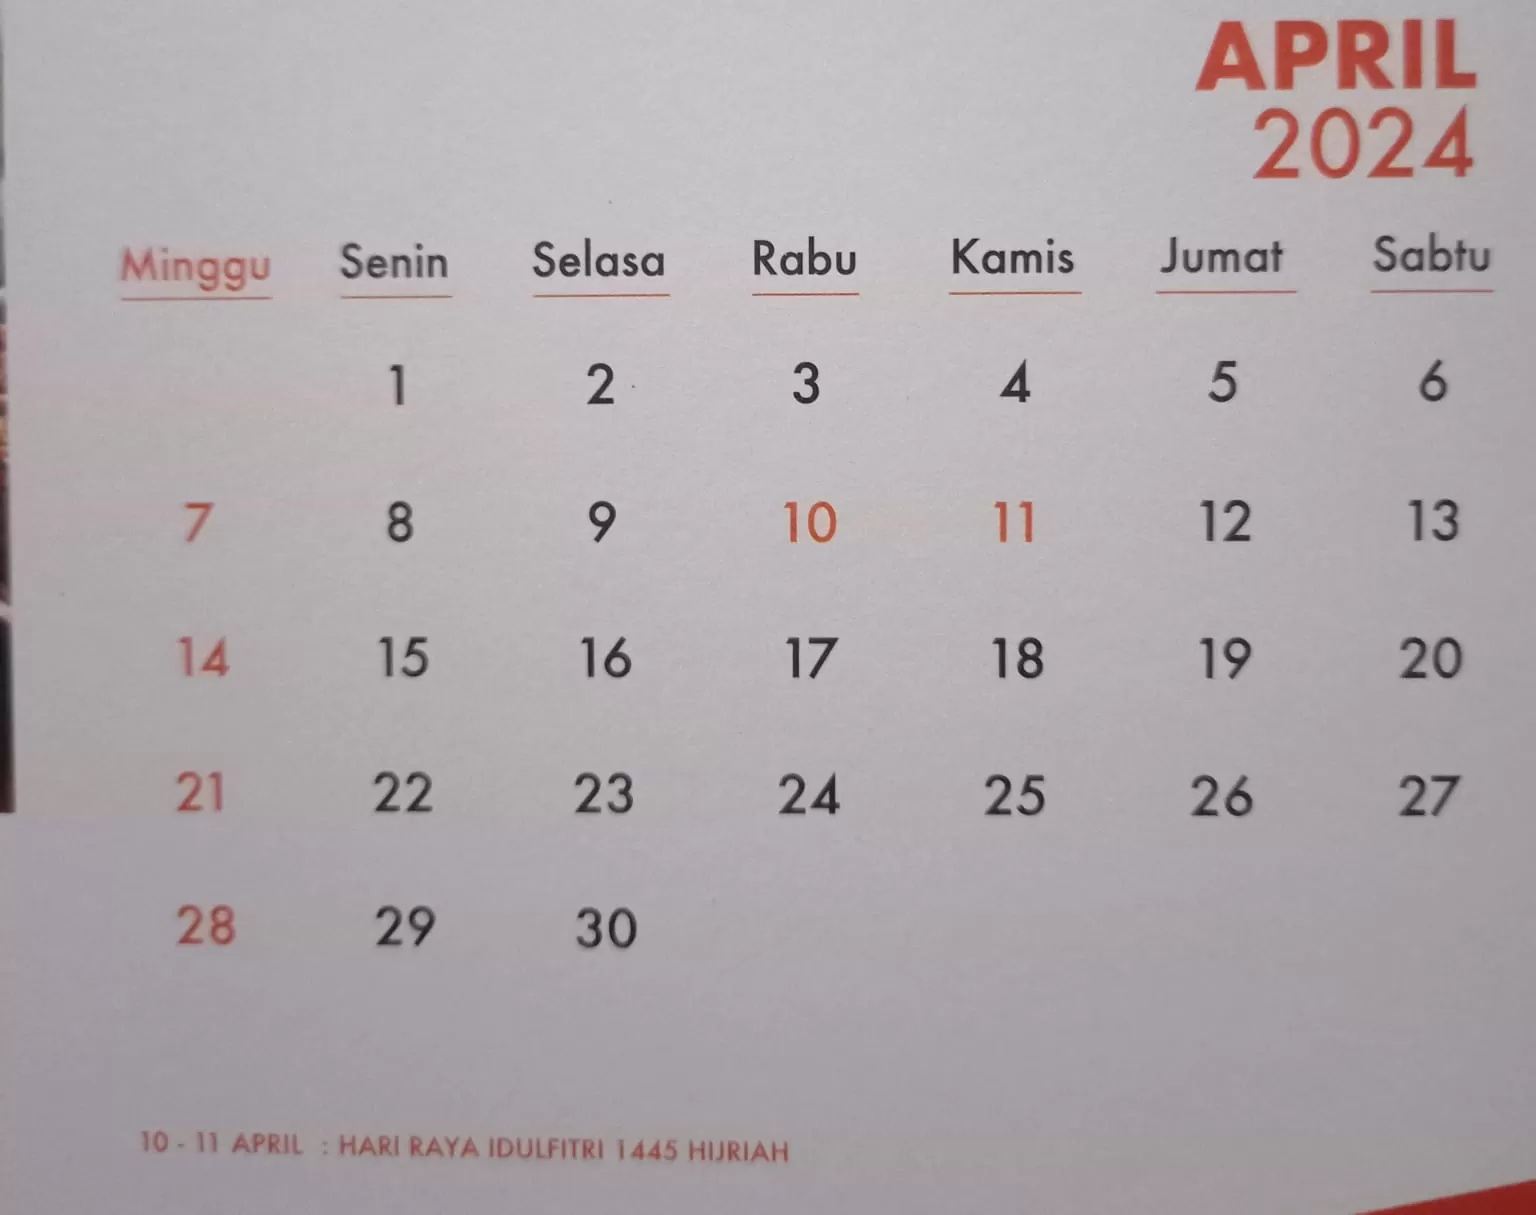 Ilustrasi kalender masehi 2024 bulan April. (Edy Pramana/JawaPo.com)